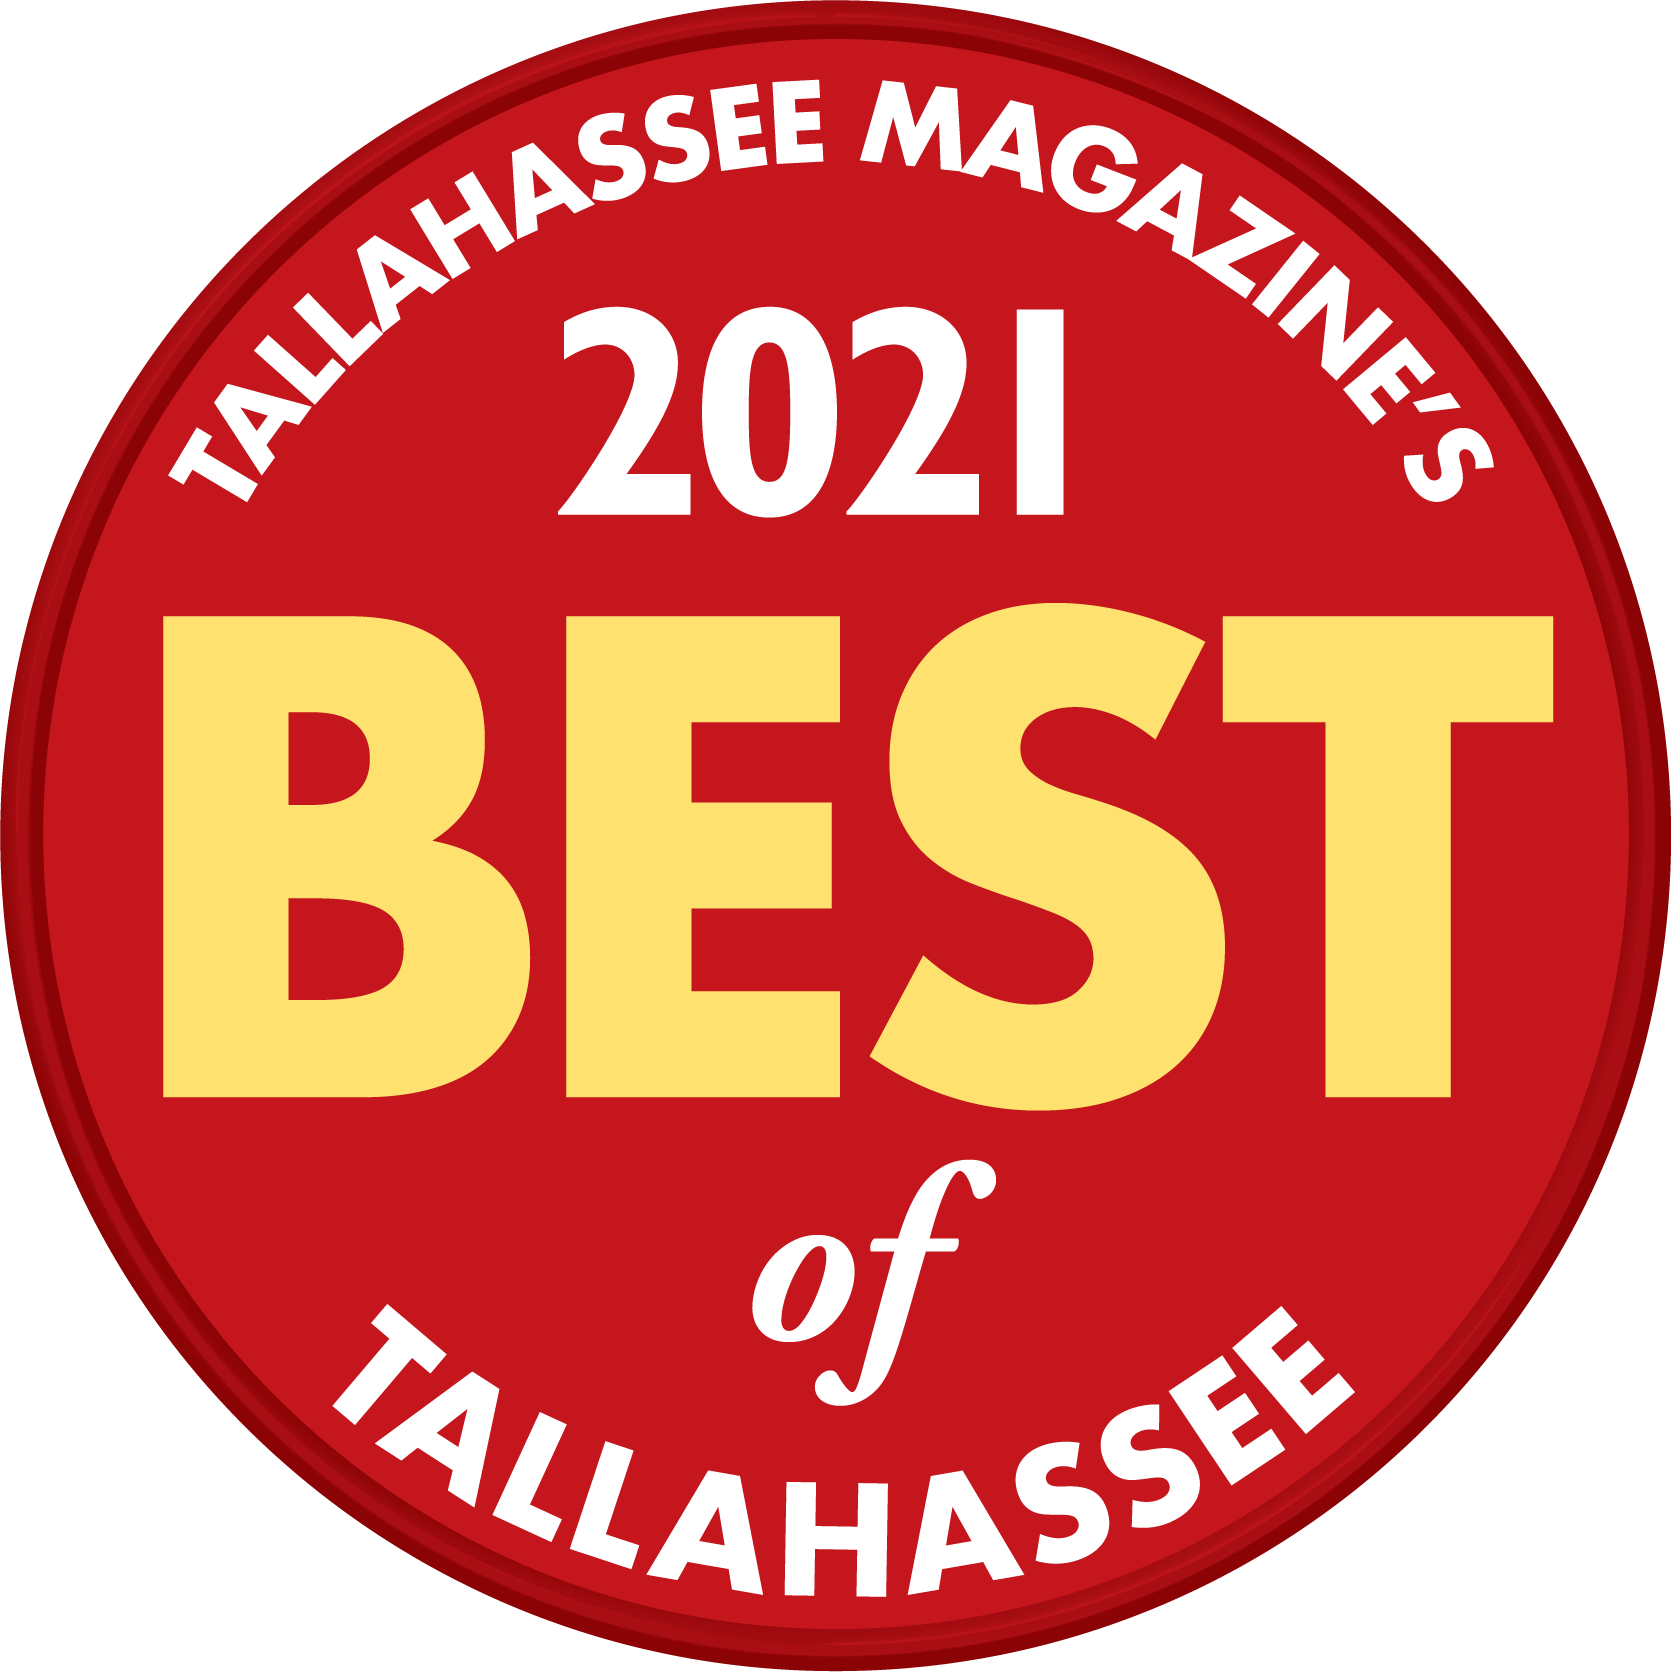 Best of Tallahassee Magazine 2021